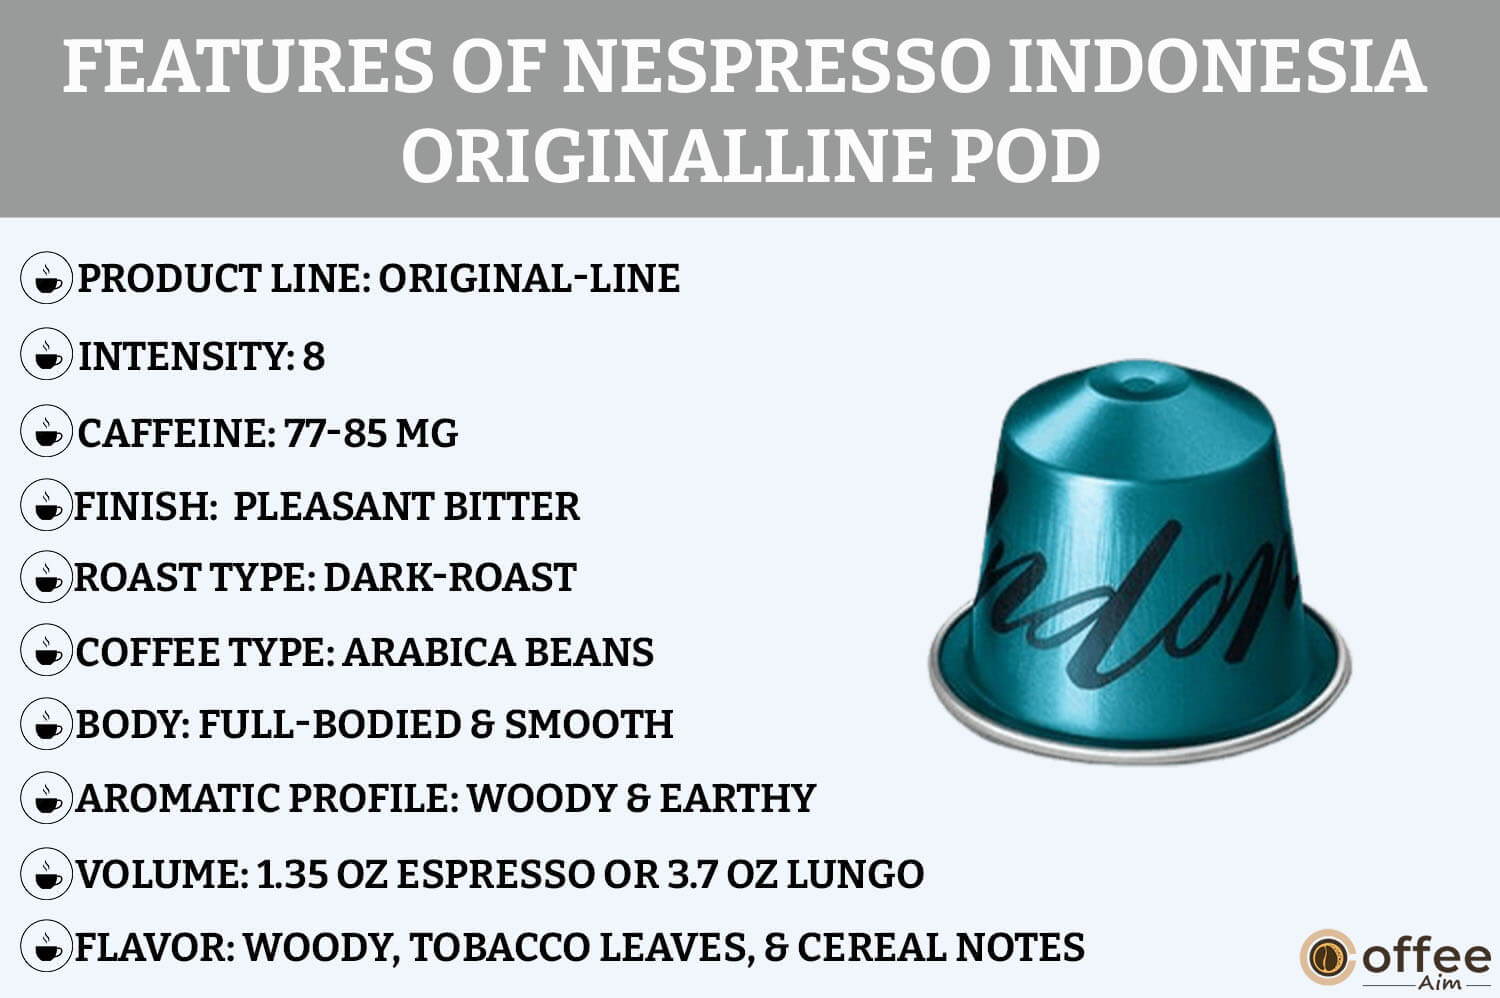 This image showcases the features of the Indonesia OriginalLine Pod for our "Nespresso Indonesia OriginalLine Pod Review" article.